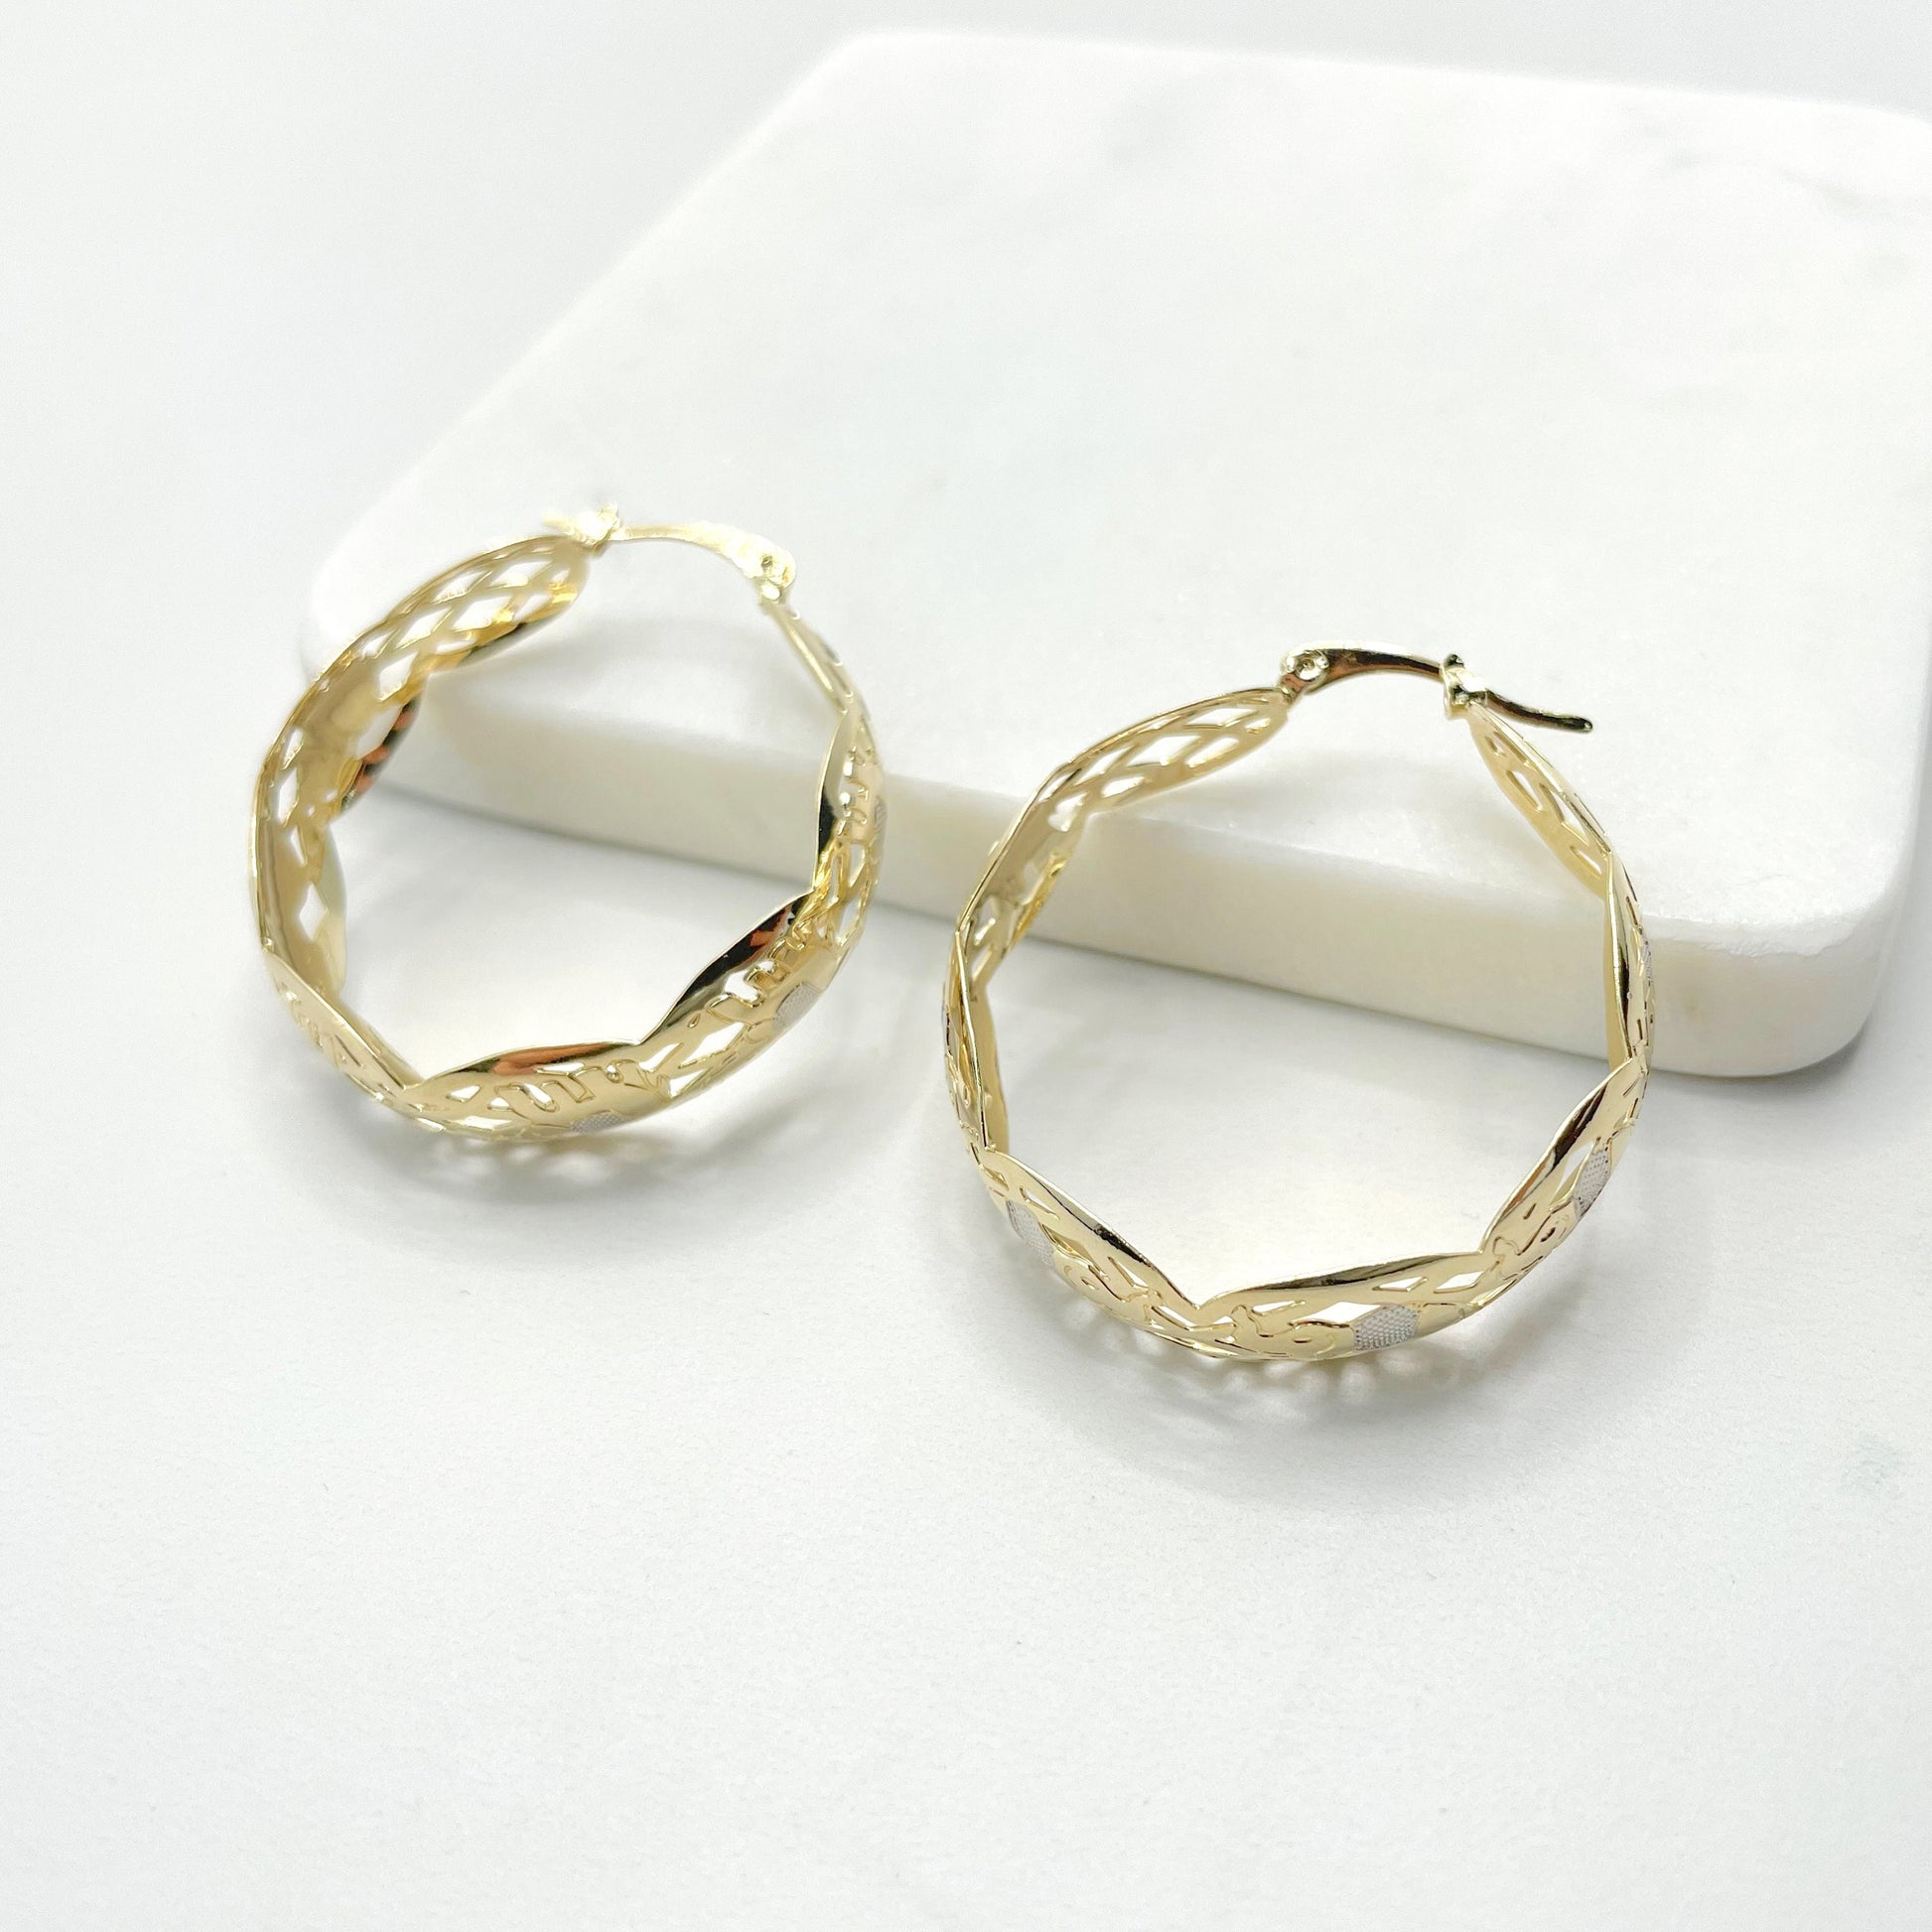 18k Gold Filled Two Tone Filigree Elephants 38mm Hoop Earrings Wholesale Jewelry Making Supplies